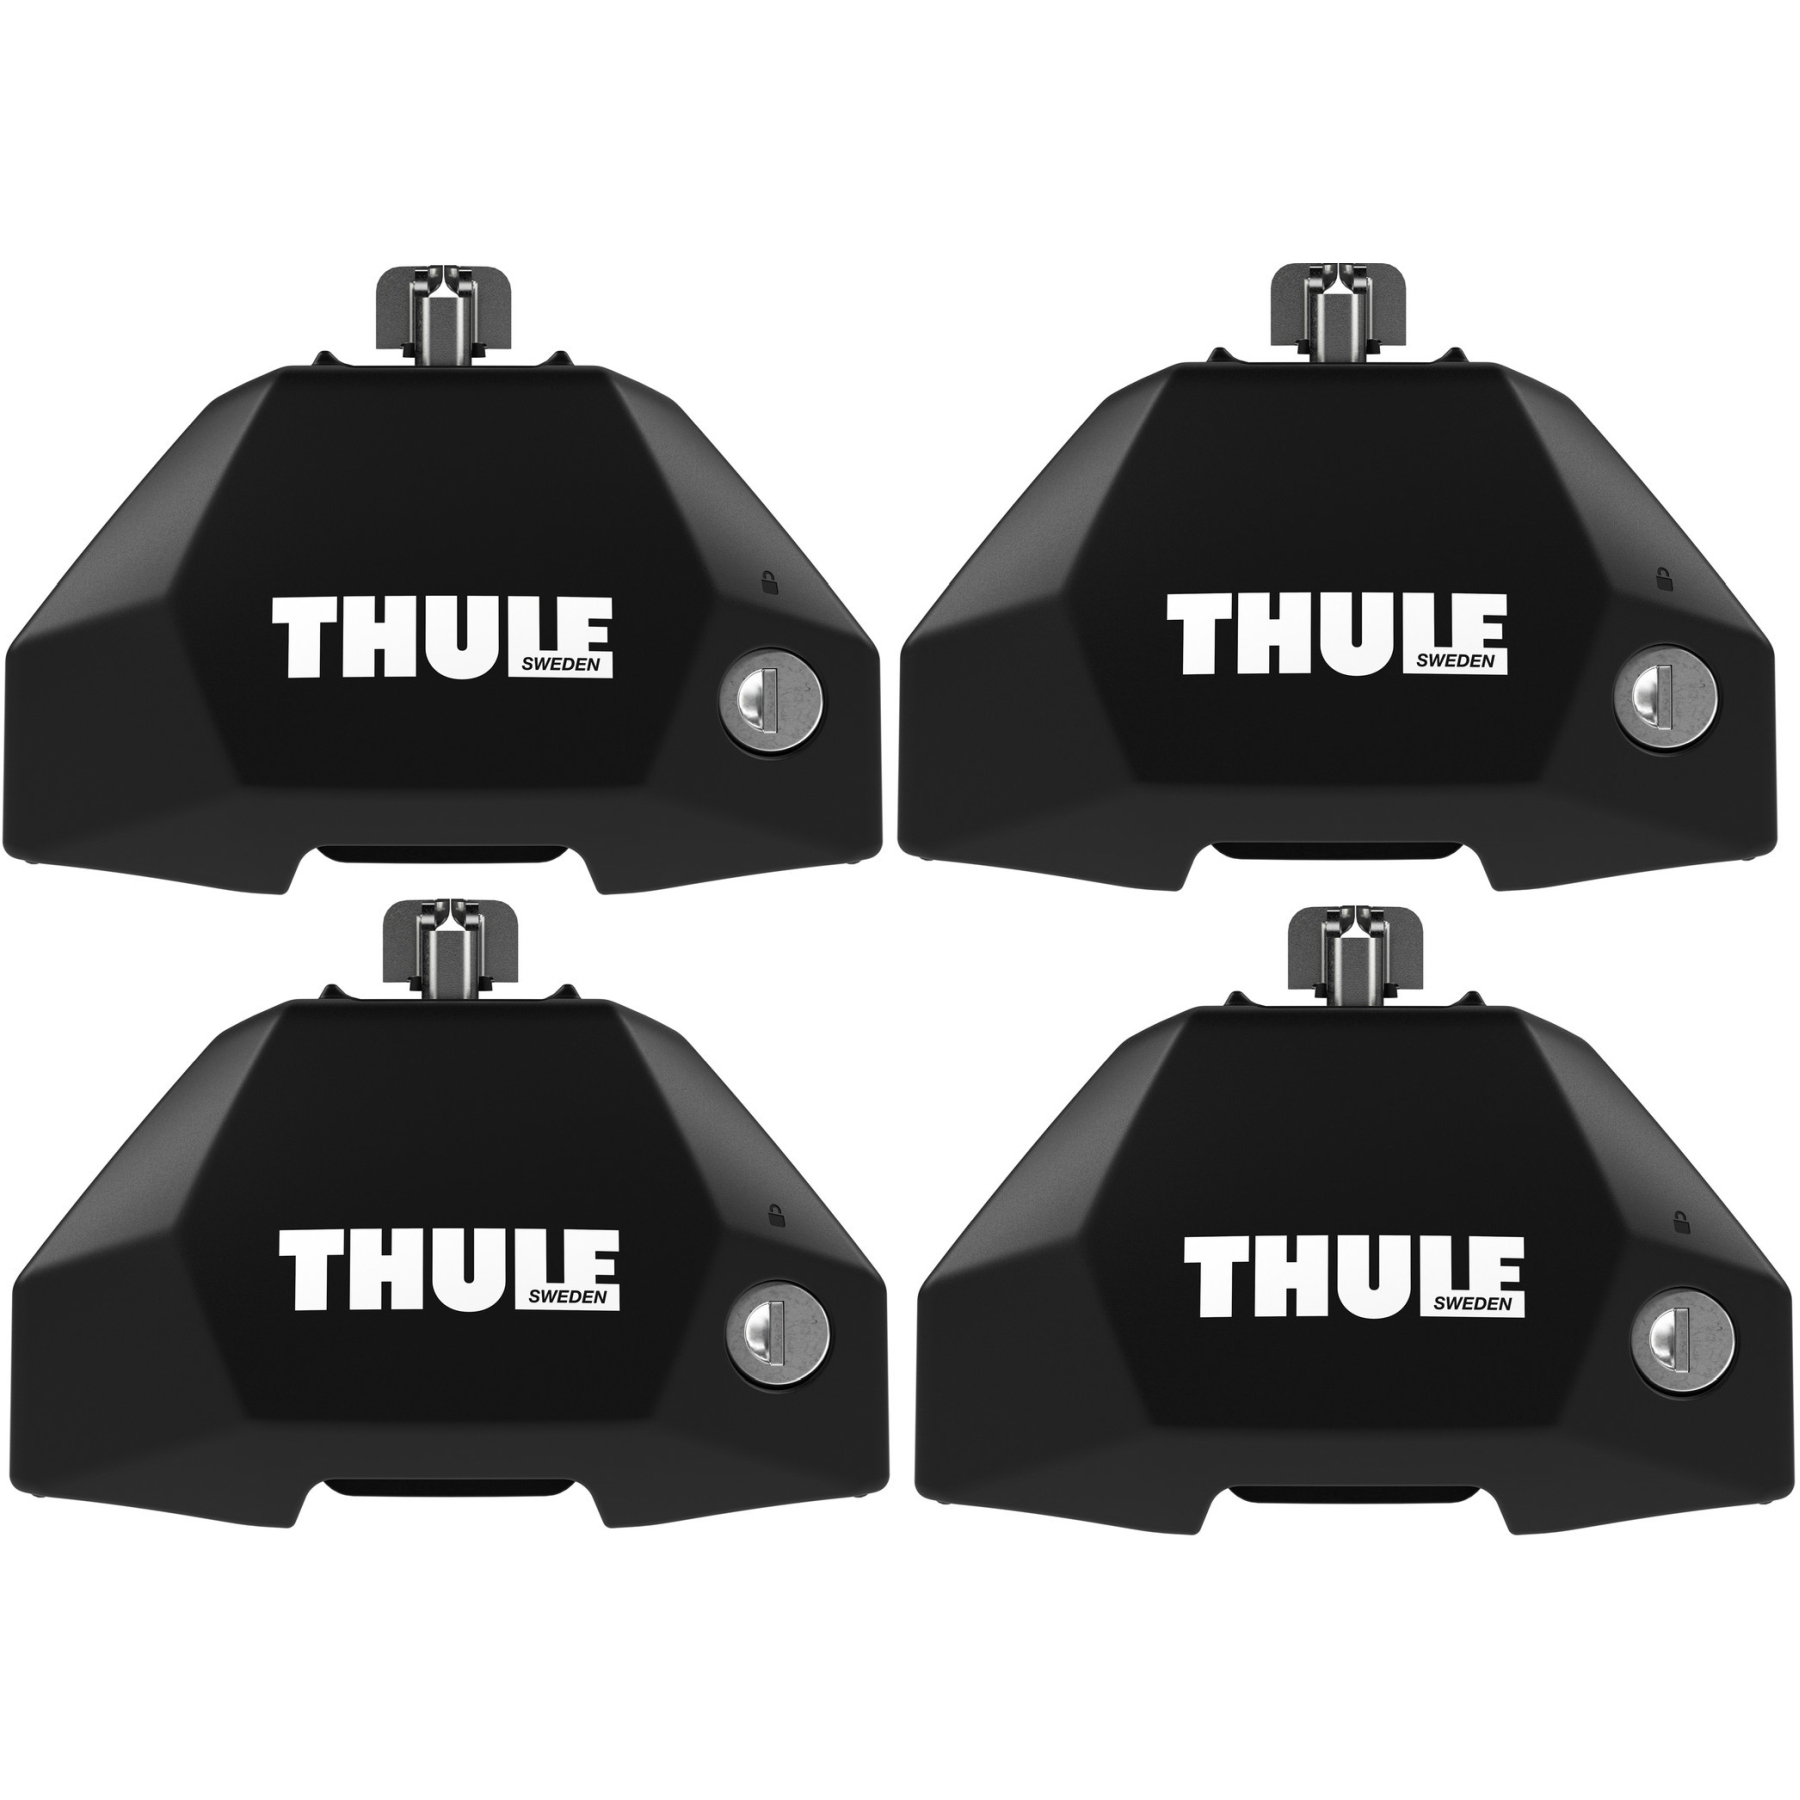 Produktbild von Thule Fixpoint Evo - Lastenträgerfußsatz für Thule Evo Dachträgersystem